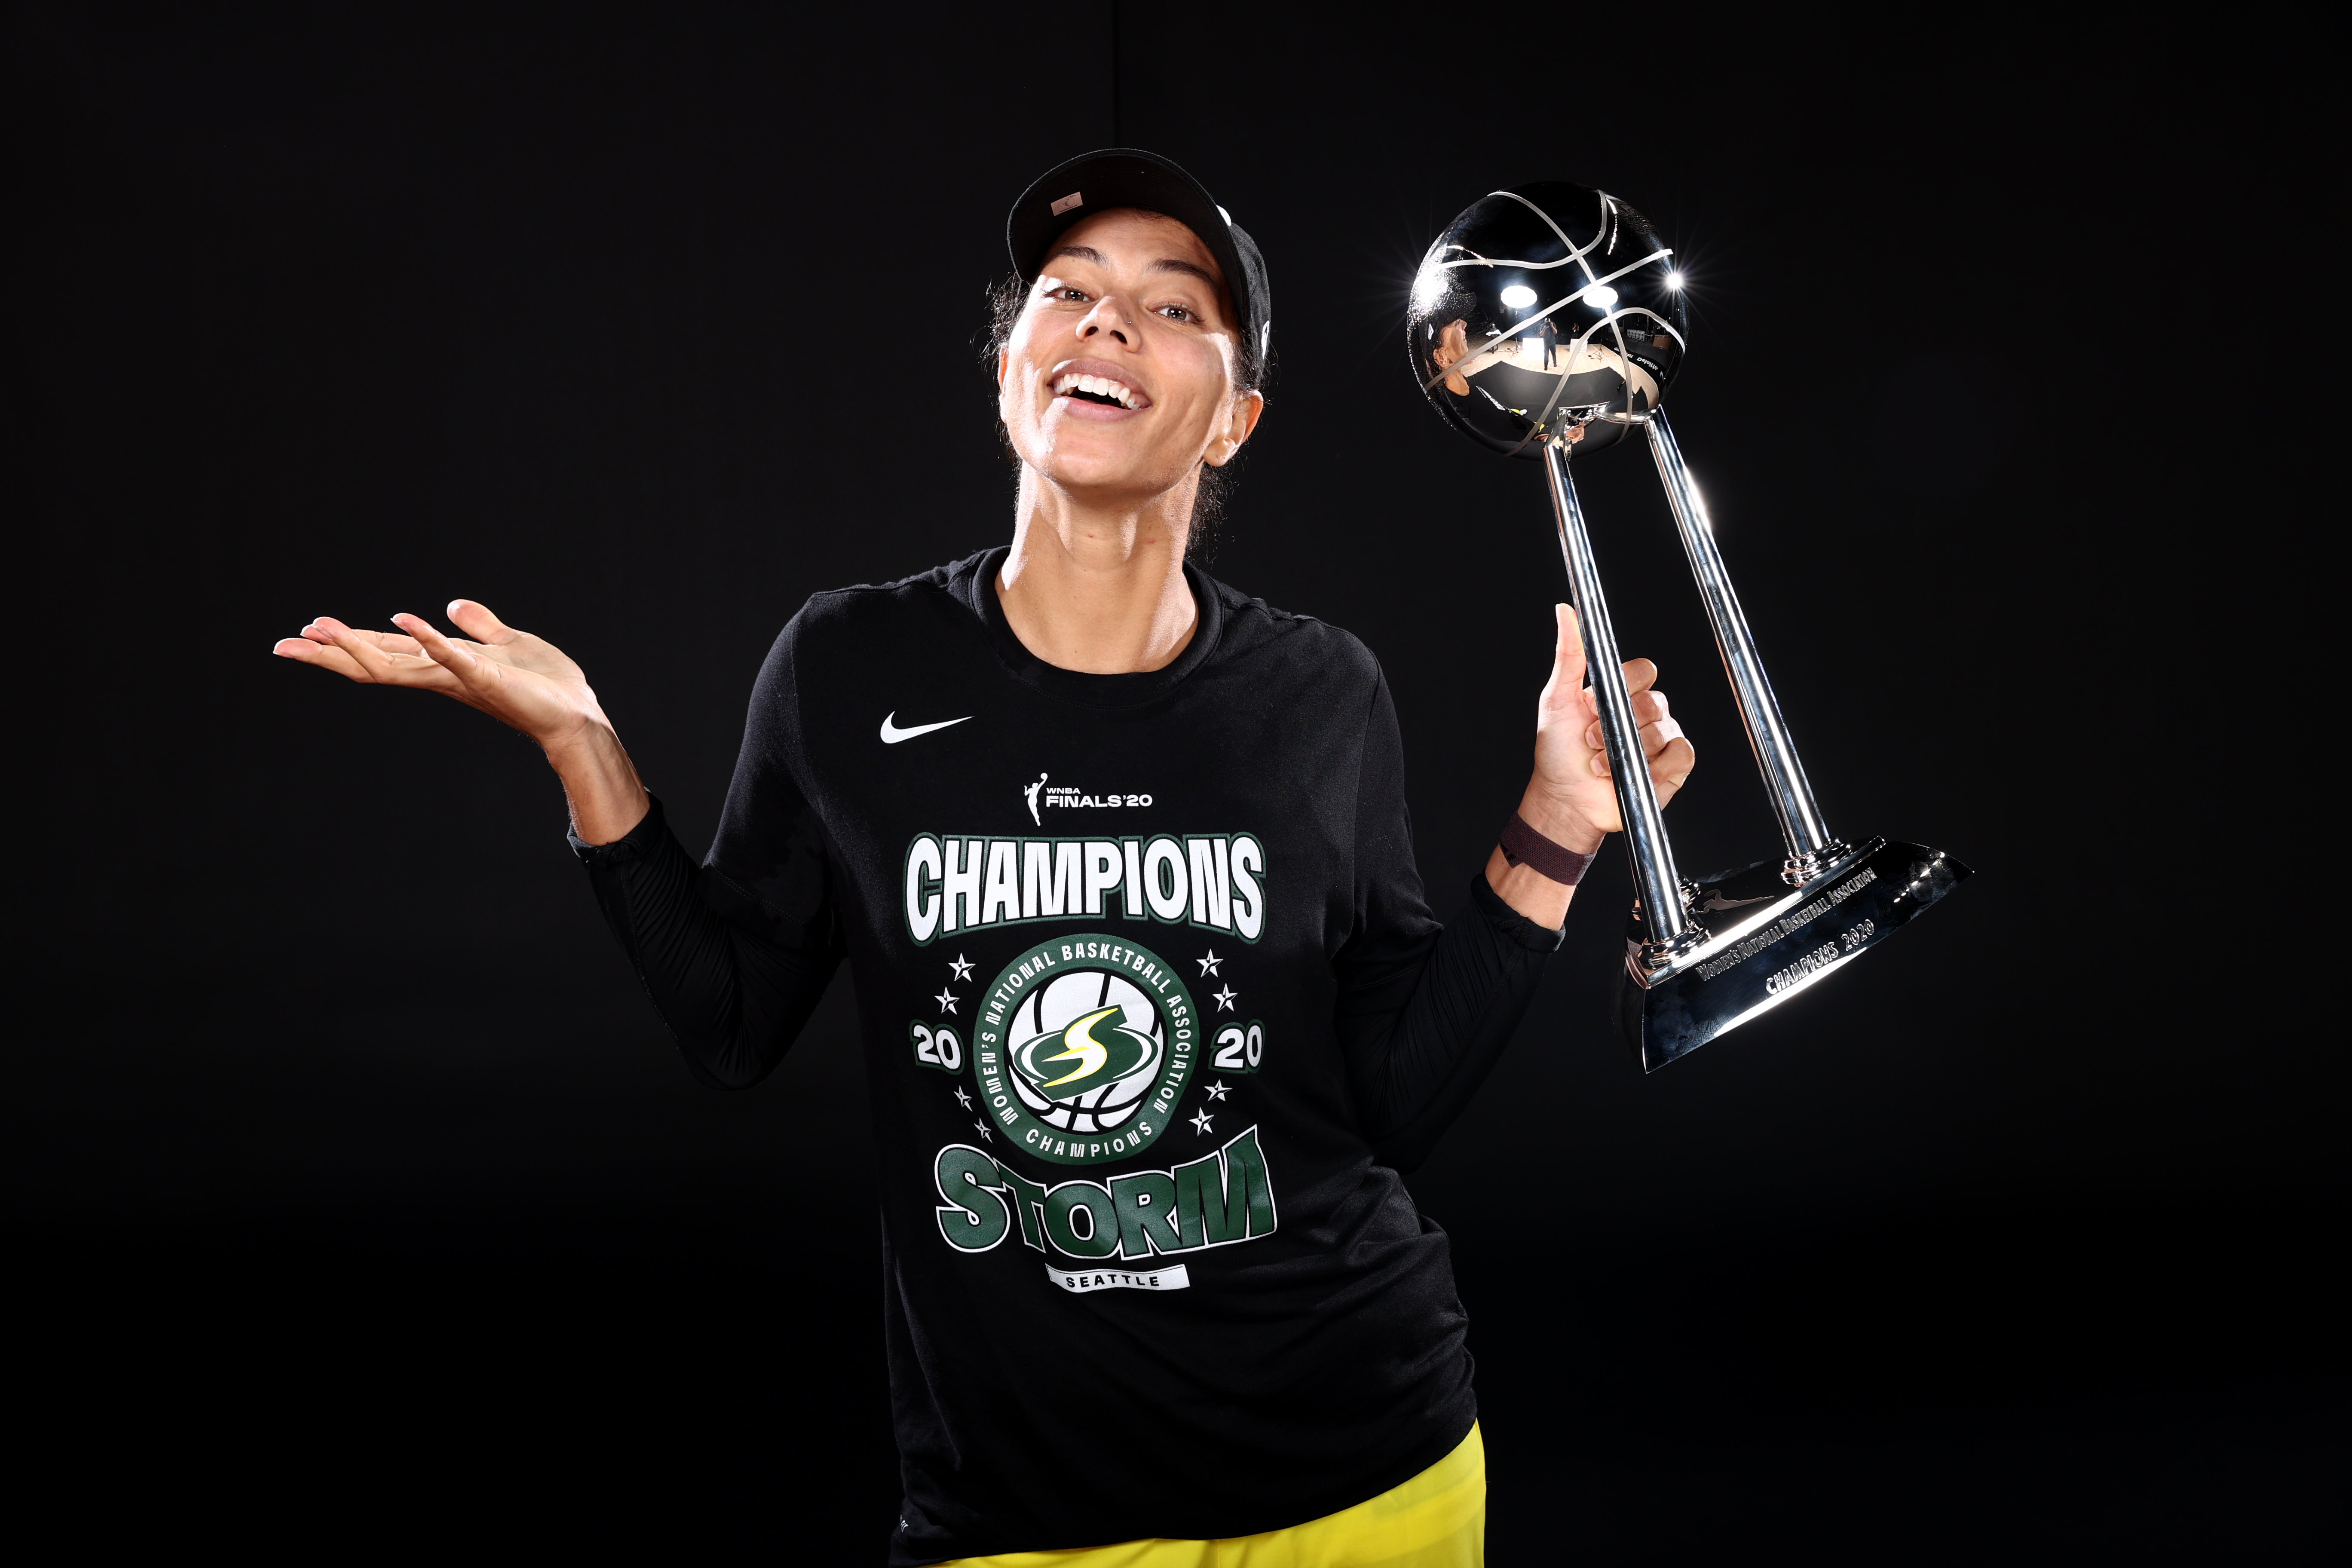 WNBA Championship Portraits